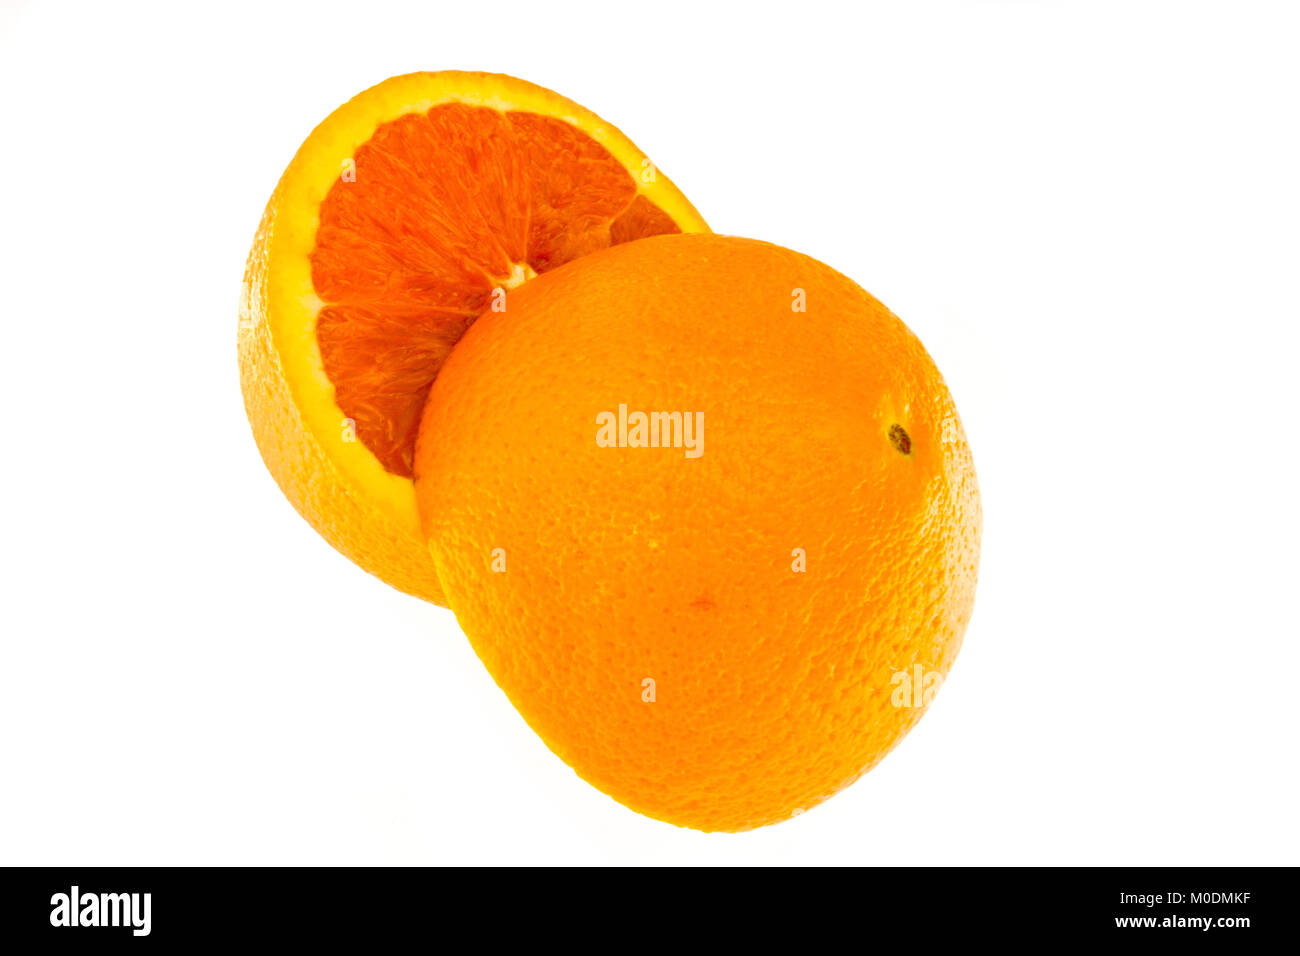 Sunkist orange hi-res stock photography and images - Alamy